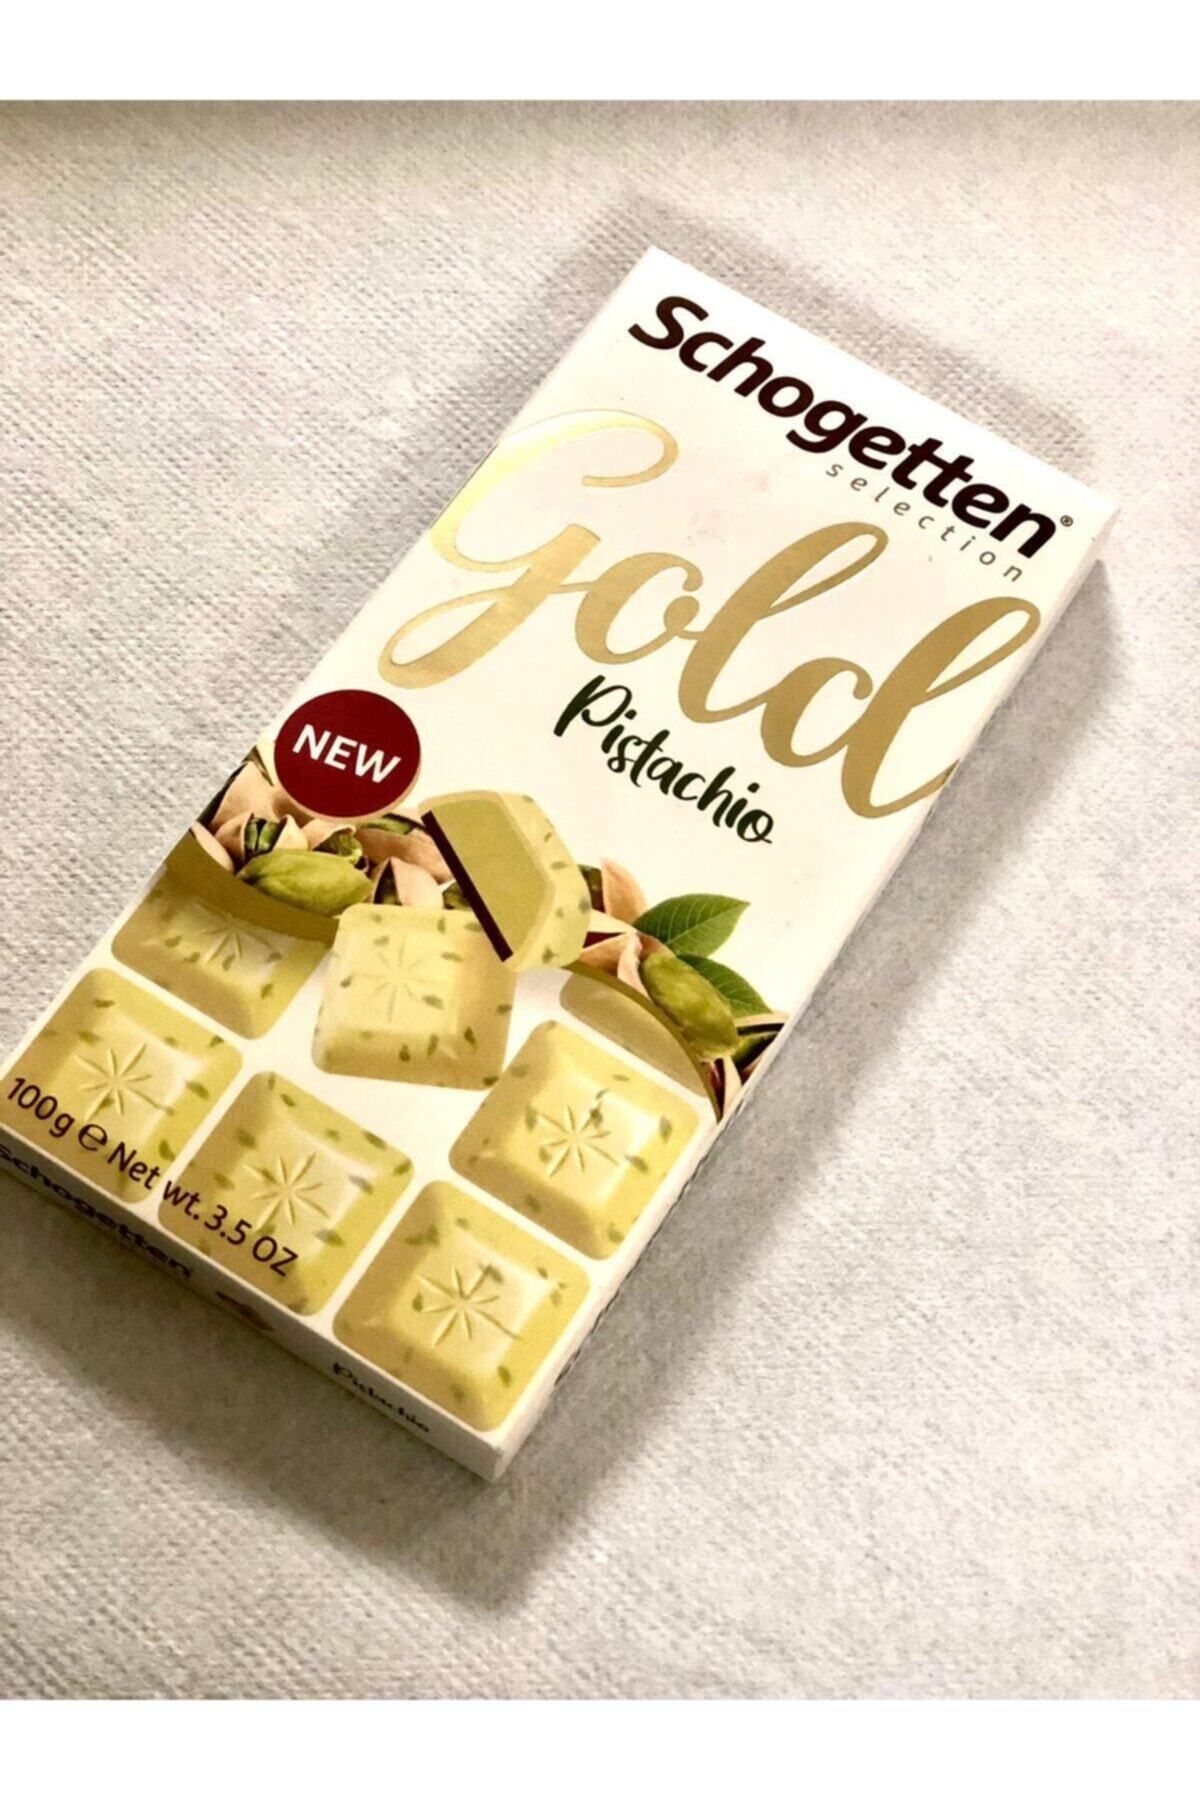 Schogetten Selection Gold Antep Fıstıklı Pistachio Çikolata 100g